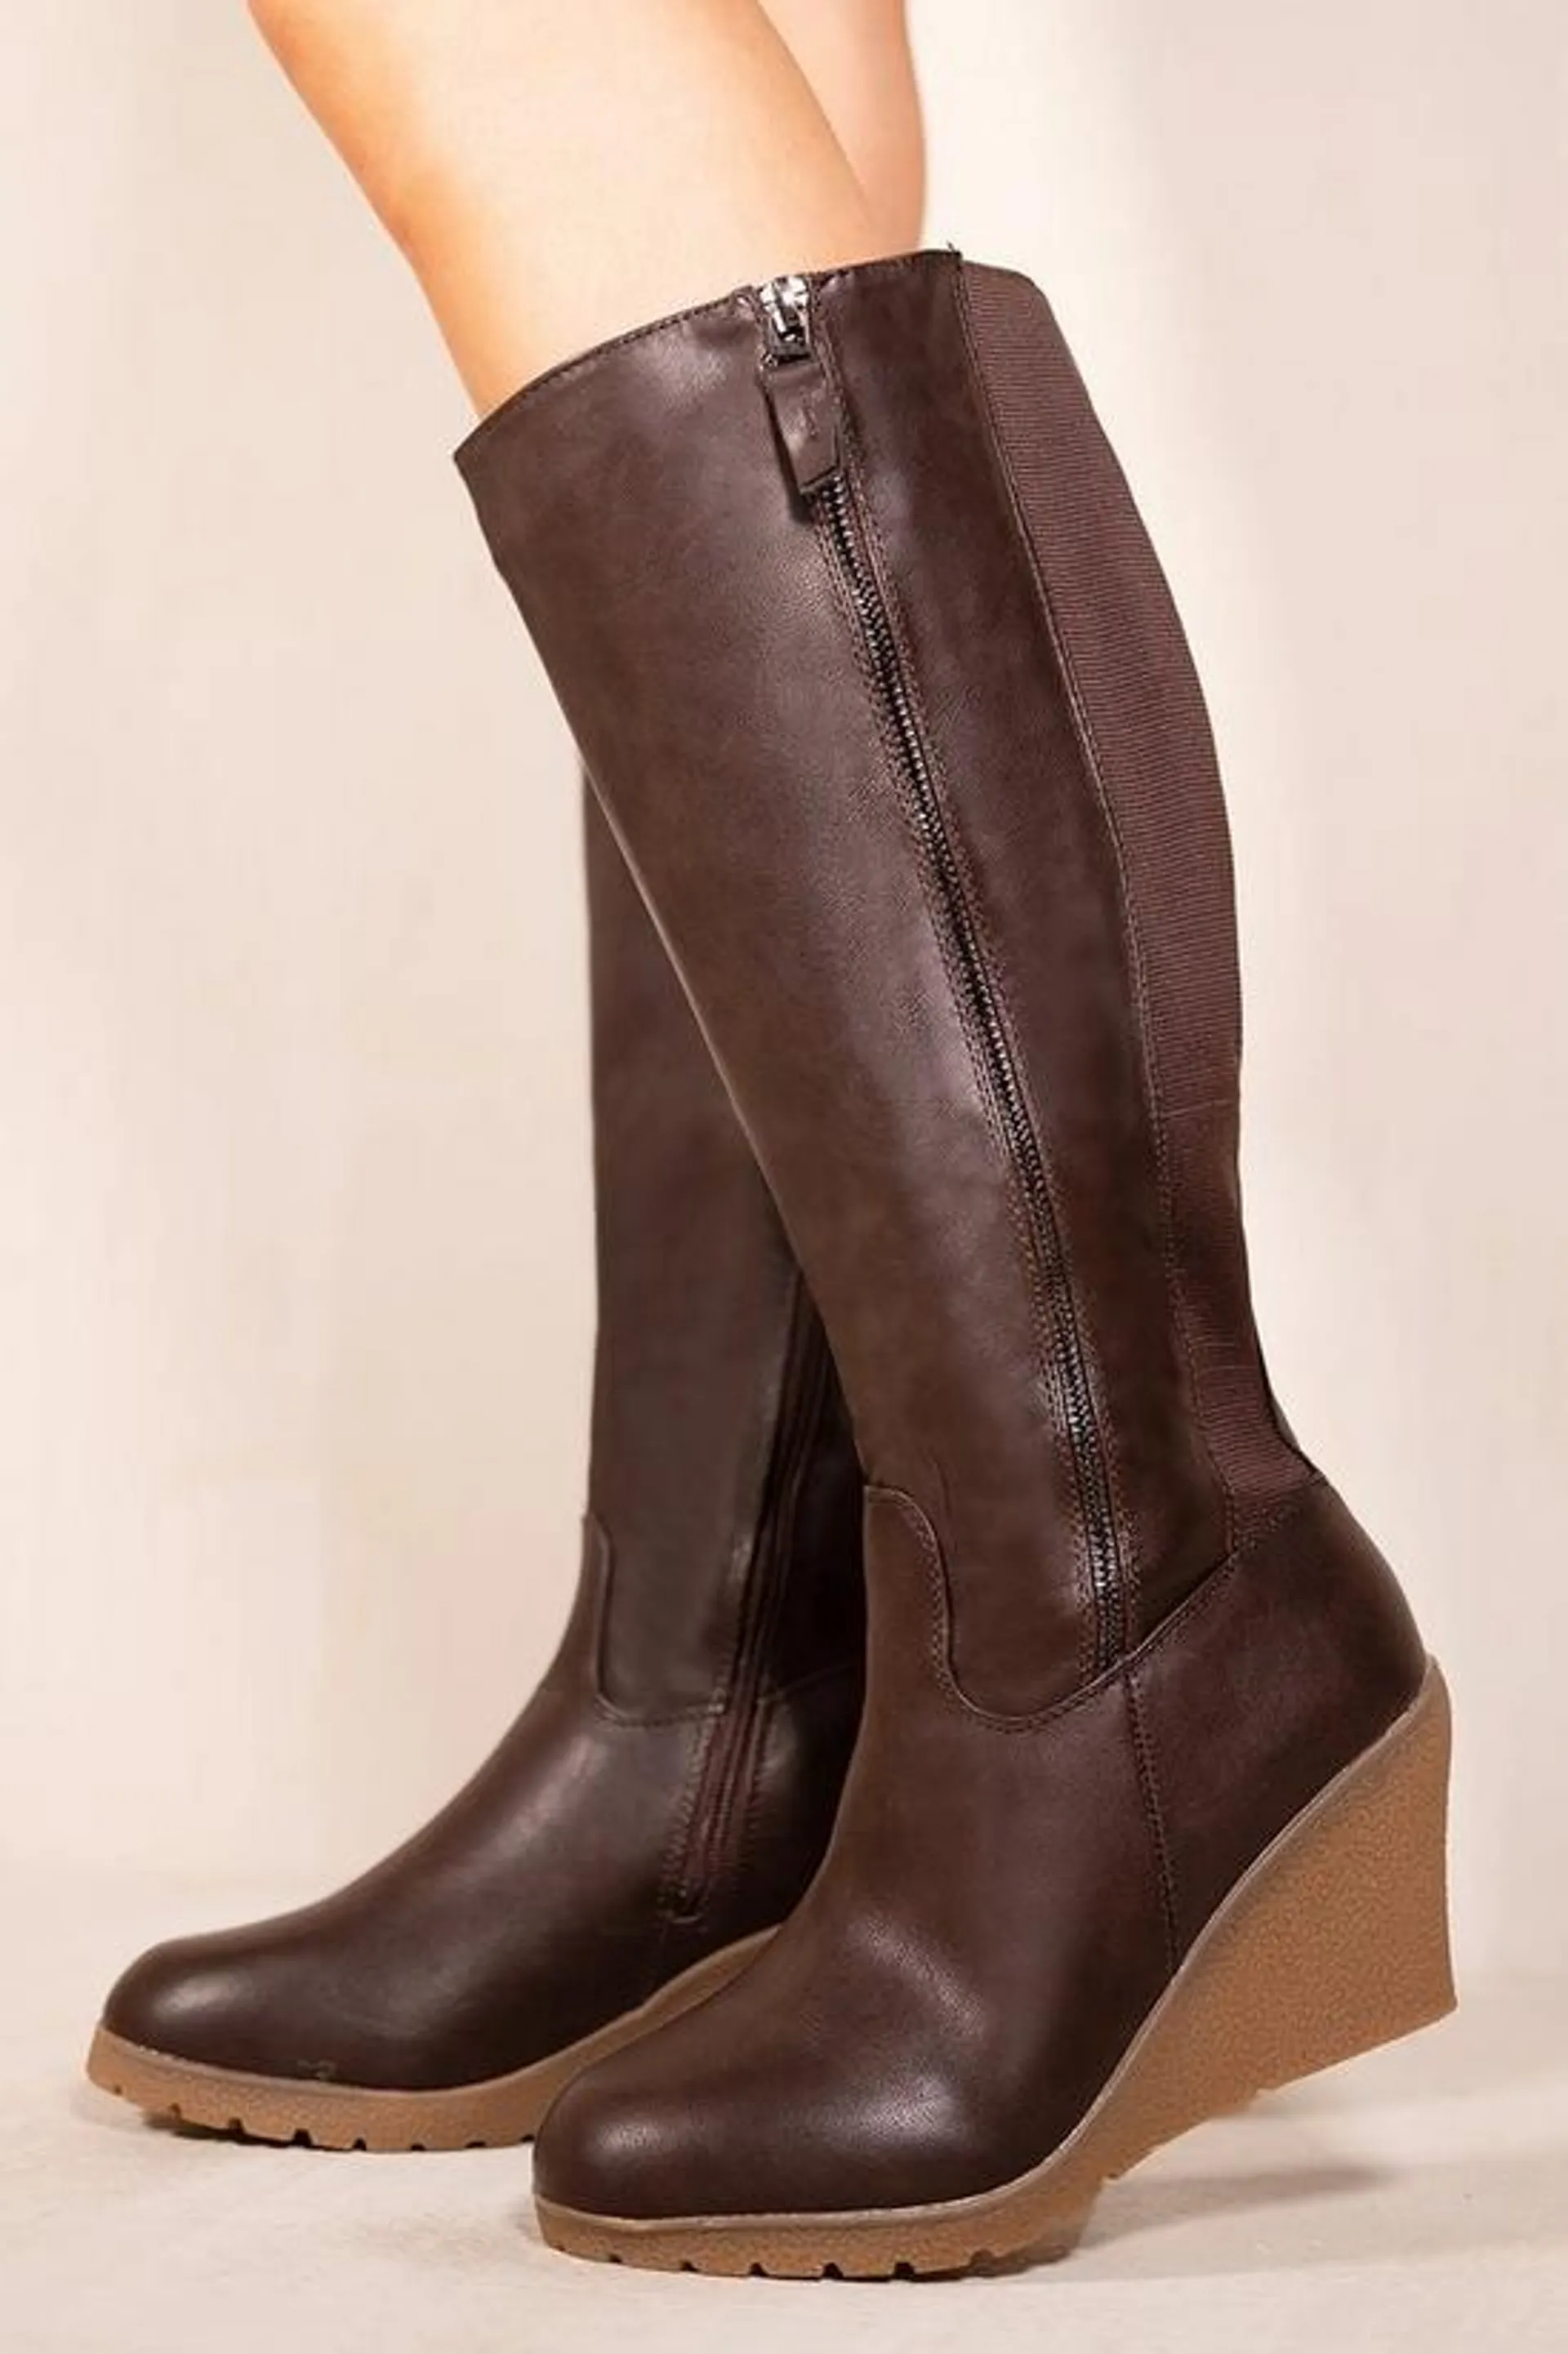 'Lara' Wedge Heel Mid Calf High Boots With Side Zip